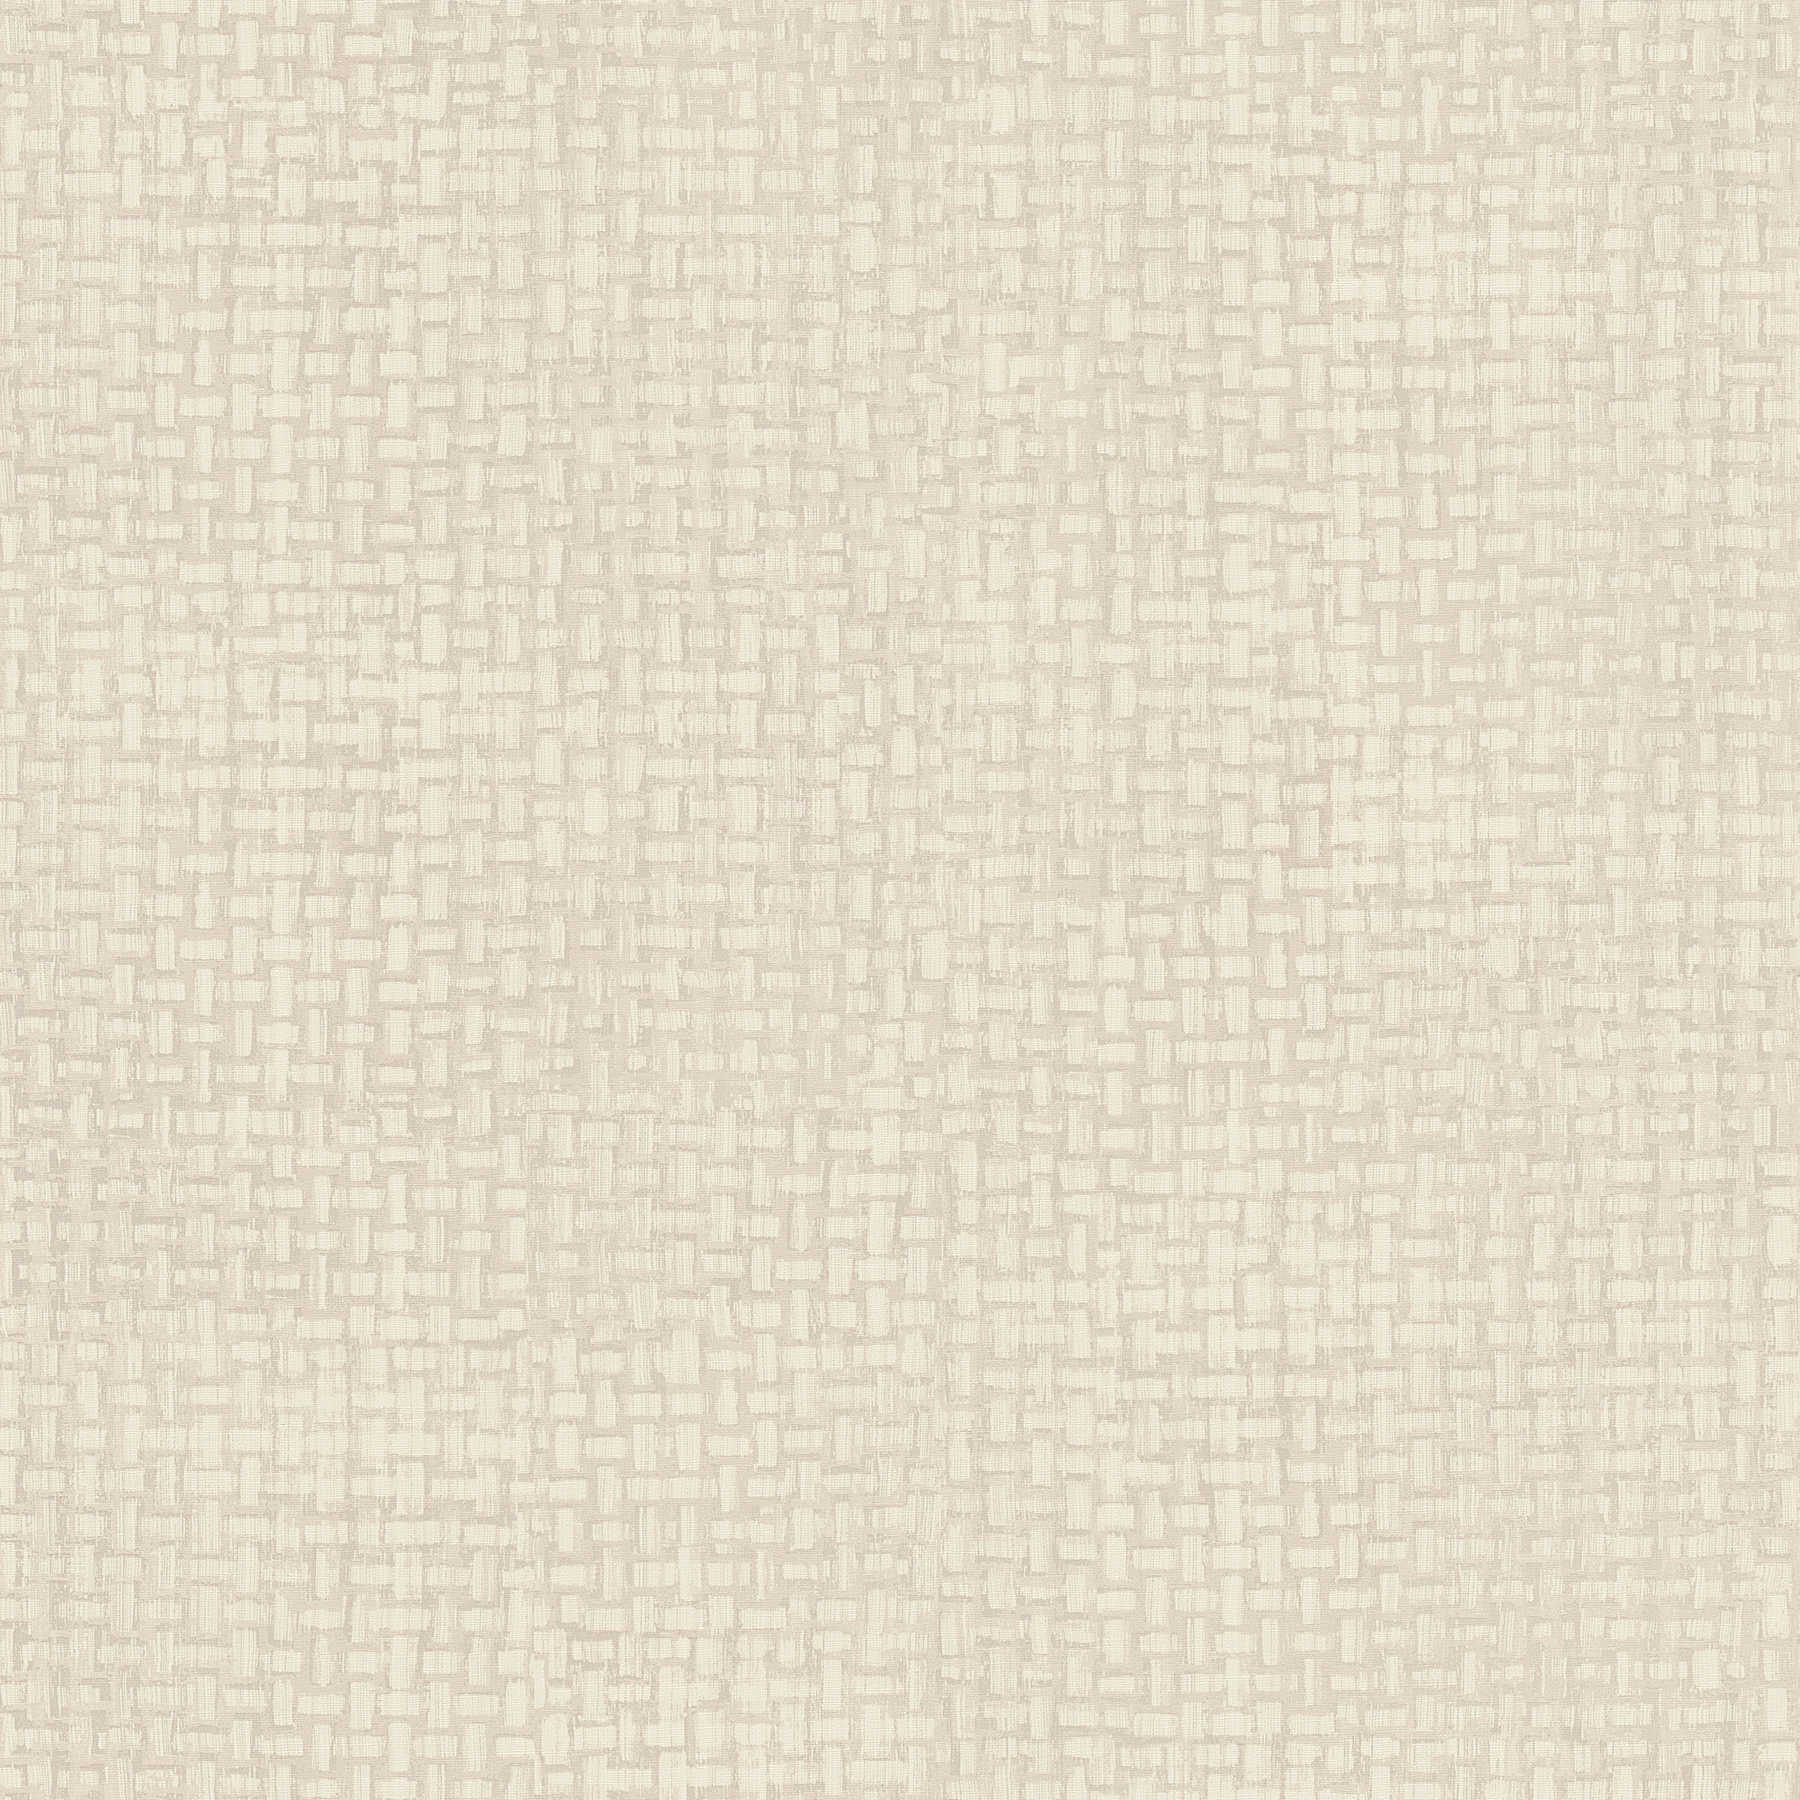 Tapete Textil-Look mit Flechtstruktur – Beige, Grau
